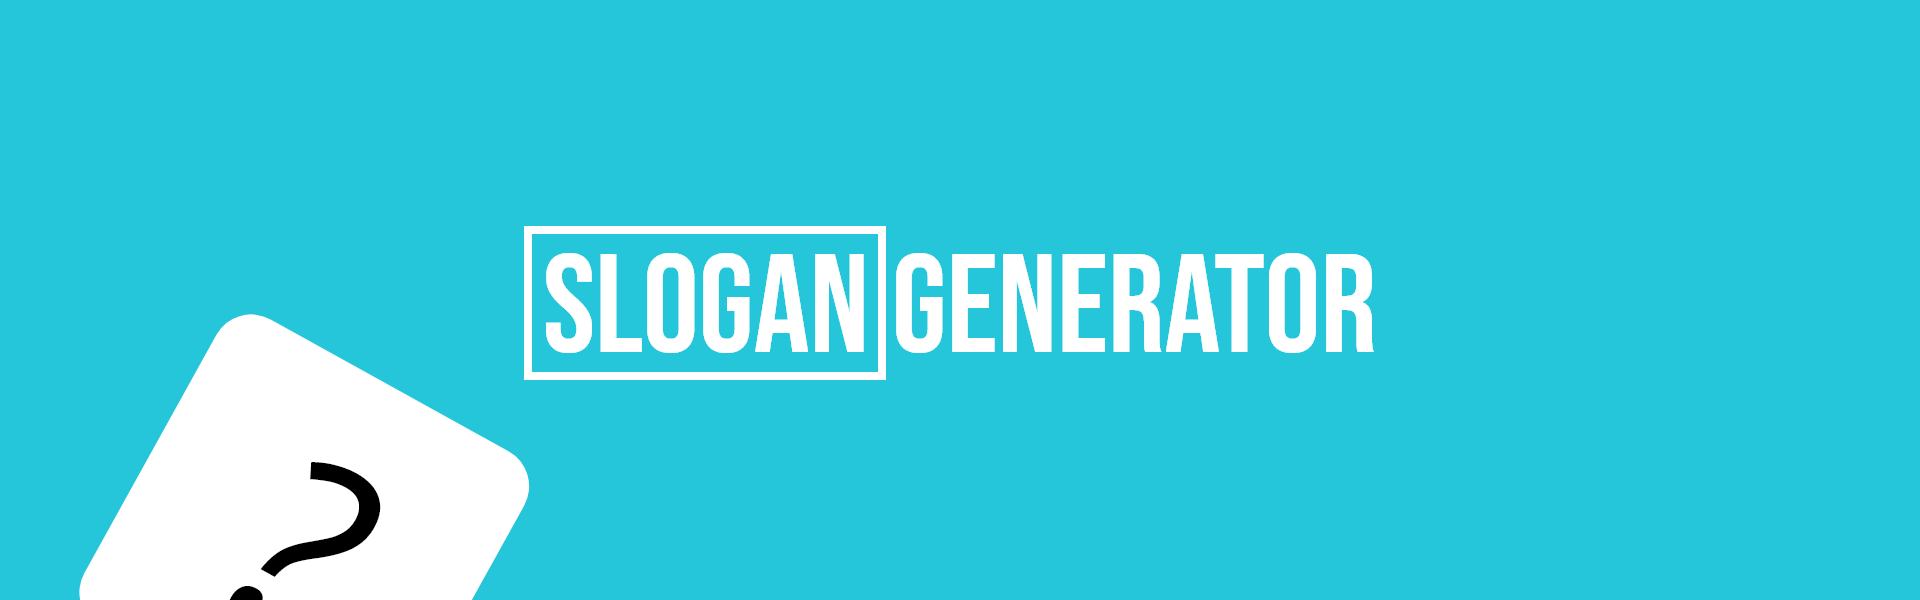 Free Generator - Slogan Maker Online - Business Slogan - Slogans